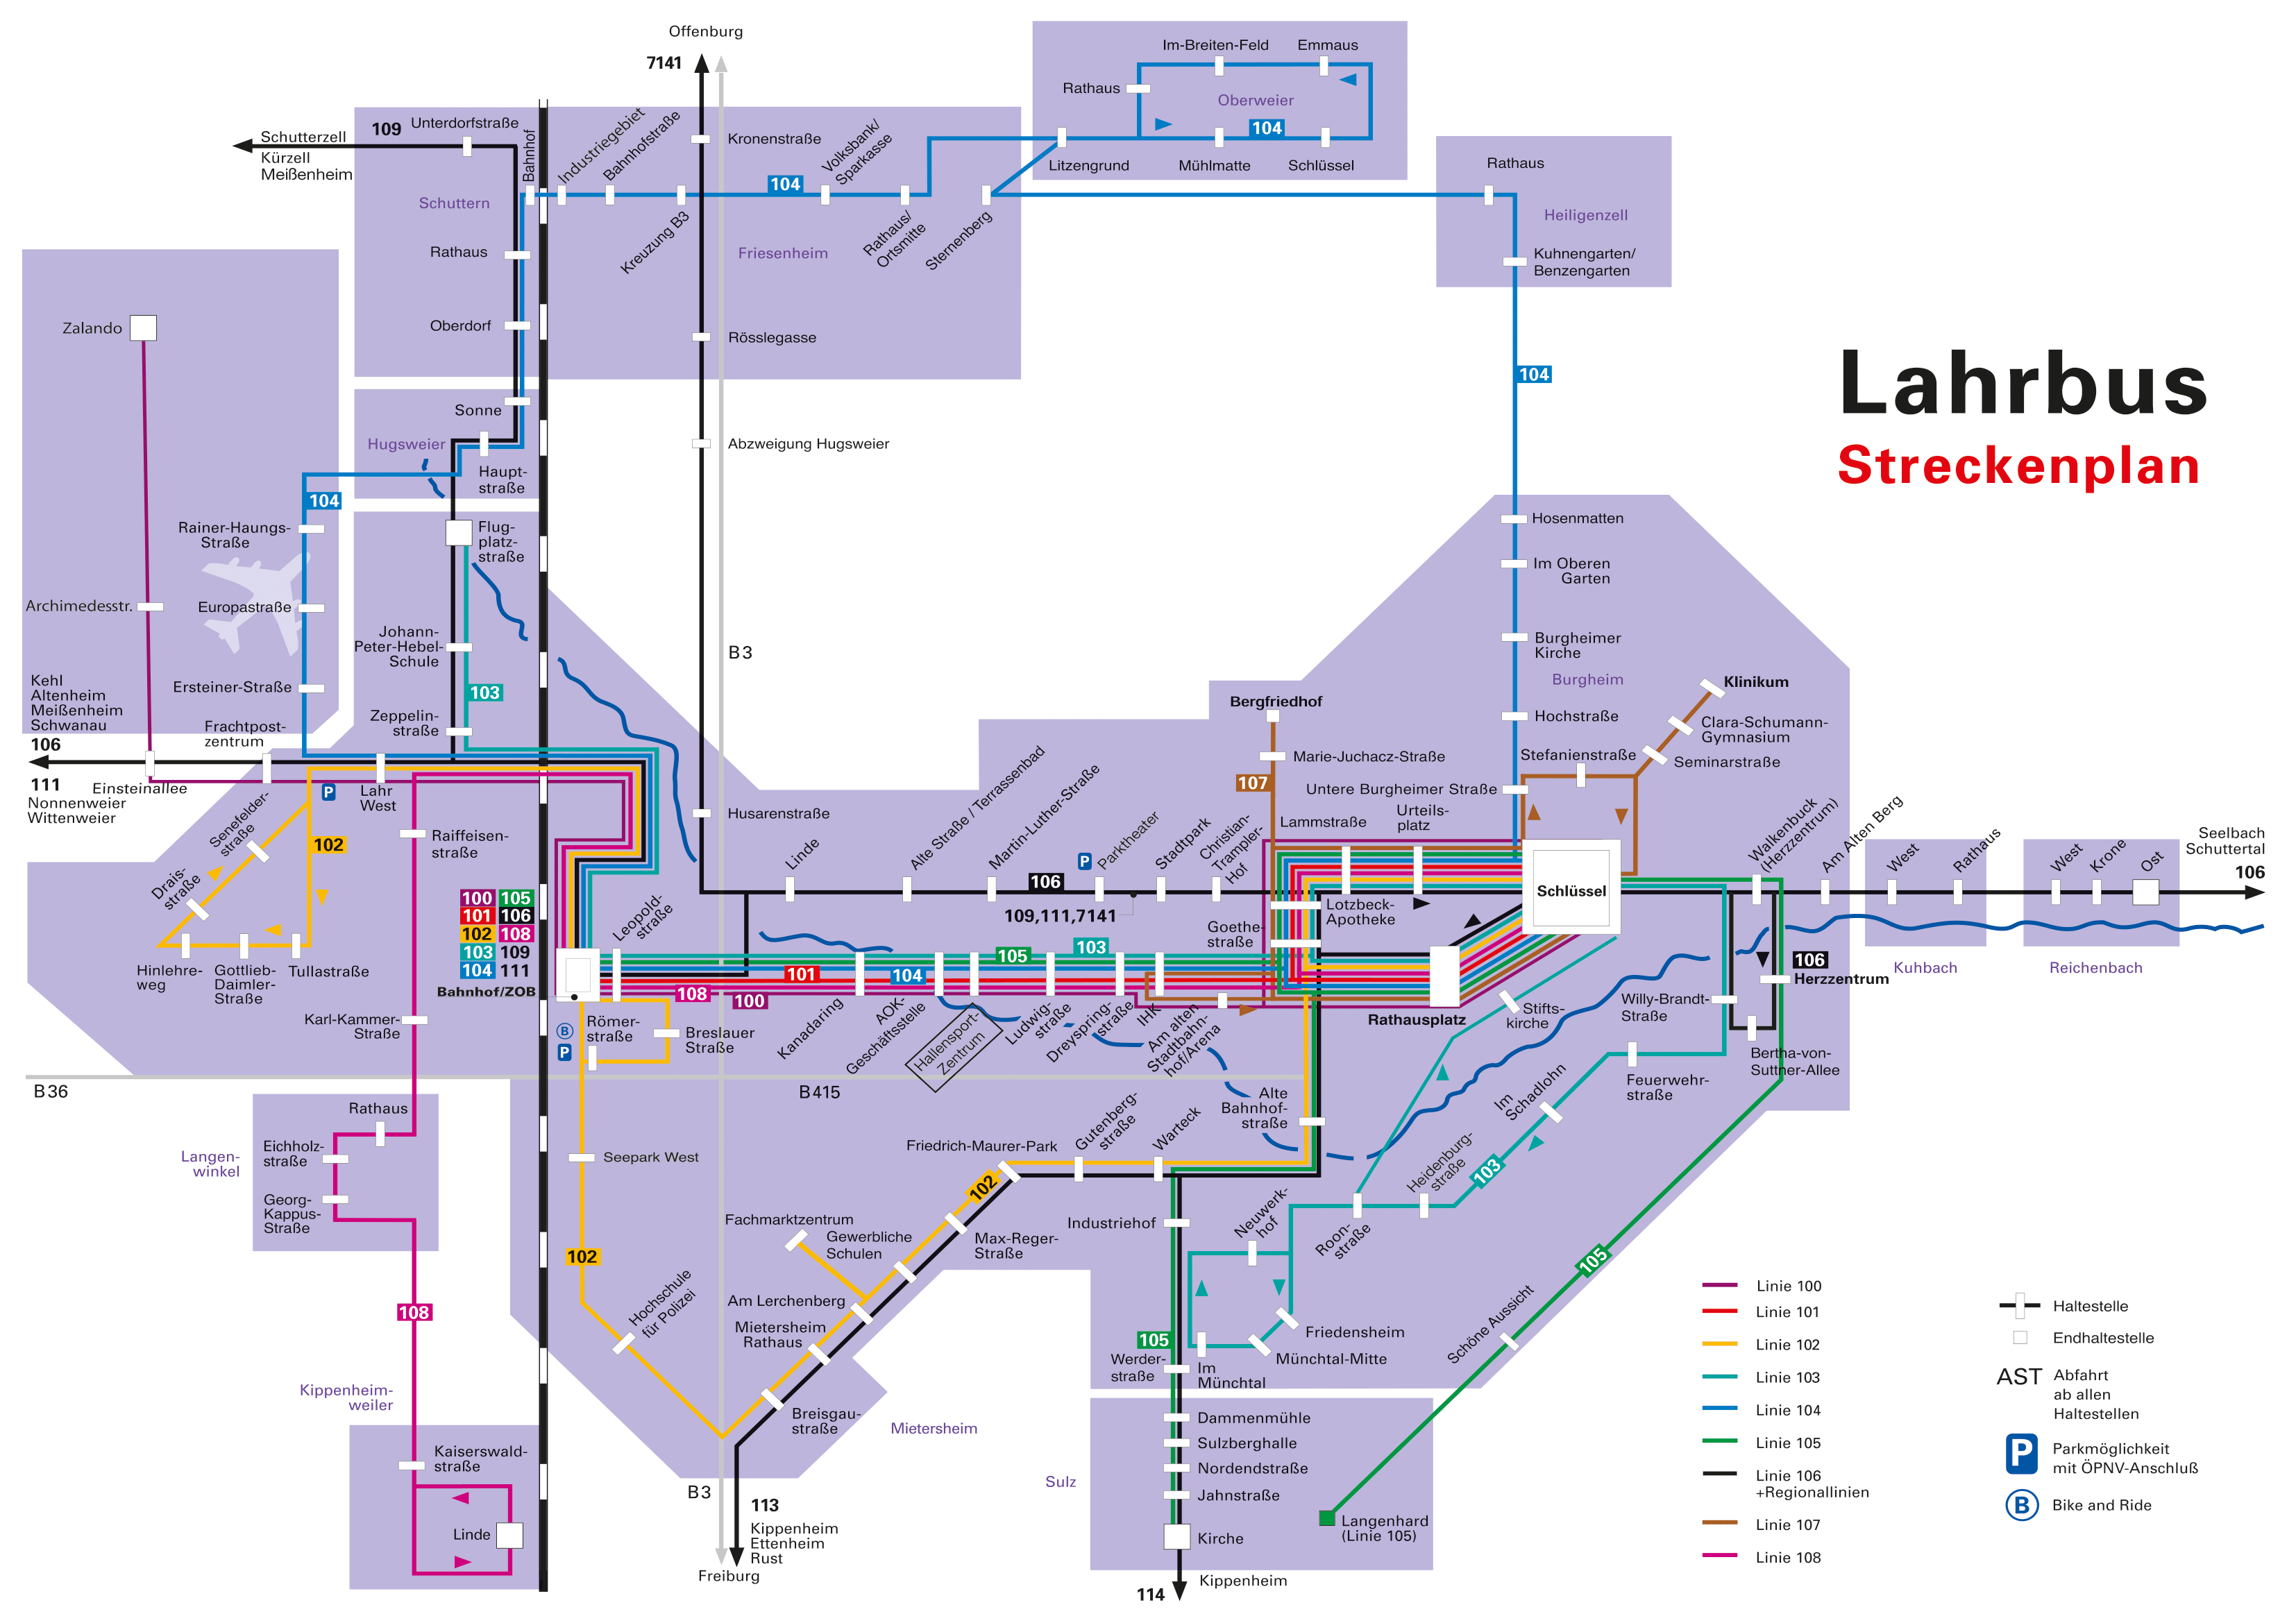 Streckenplan Lahrbus